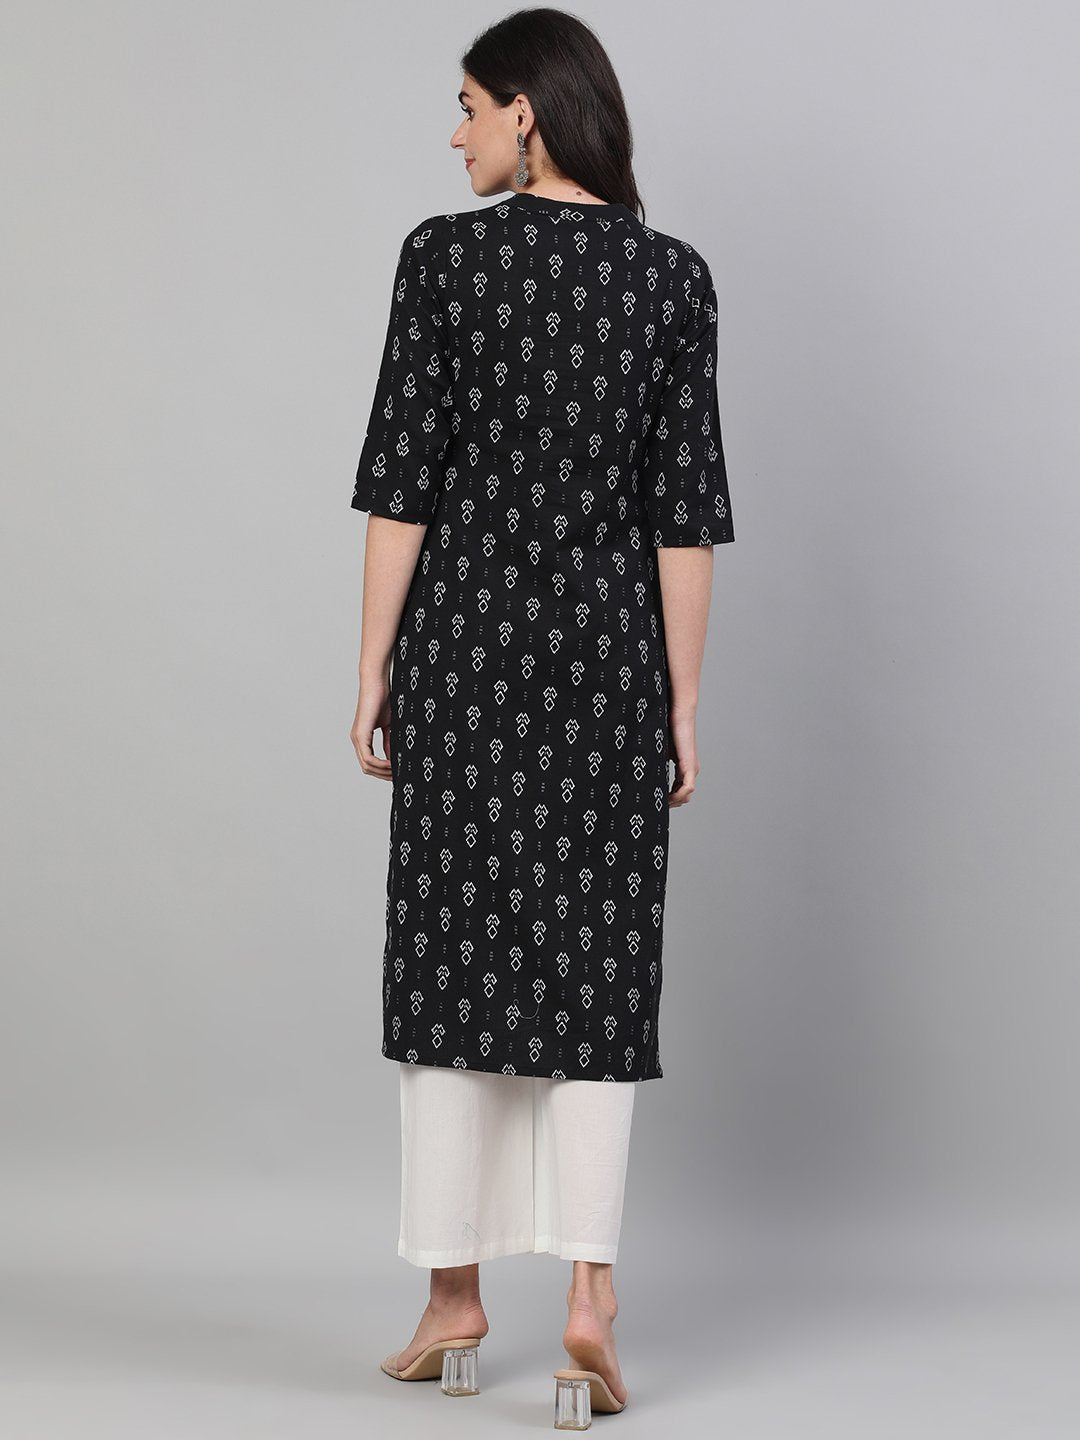 Women's Black Calf Length Three-Quarter Sleeves Straight Geometric Printed Cotton Kurta With Pockets And Face Mask - Nayo Clothing